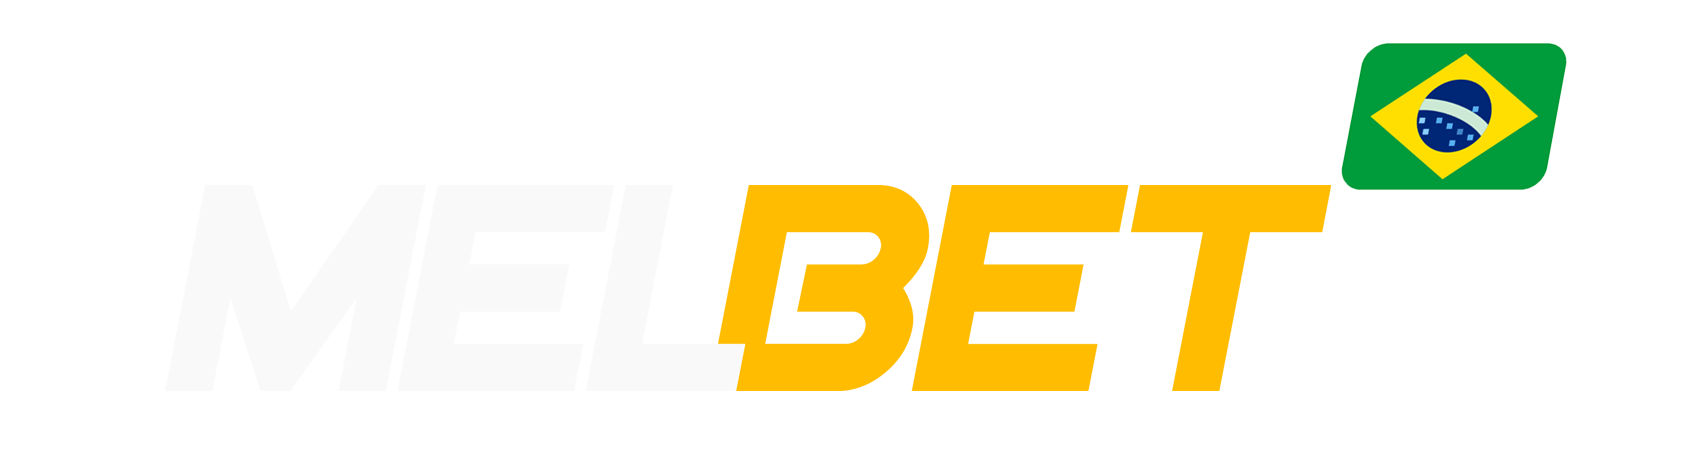 this logo for platform malbet